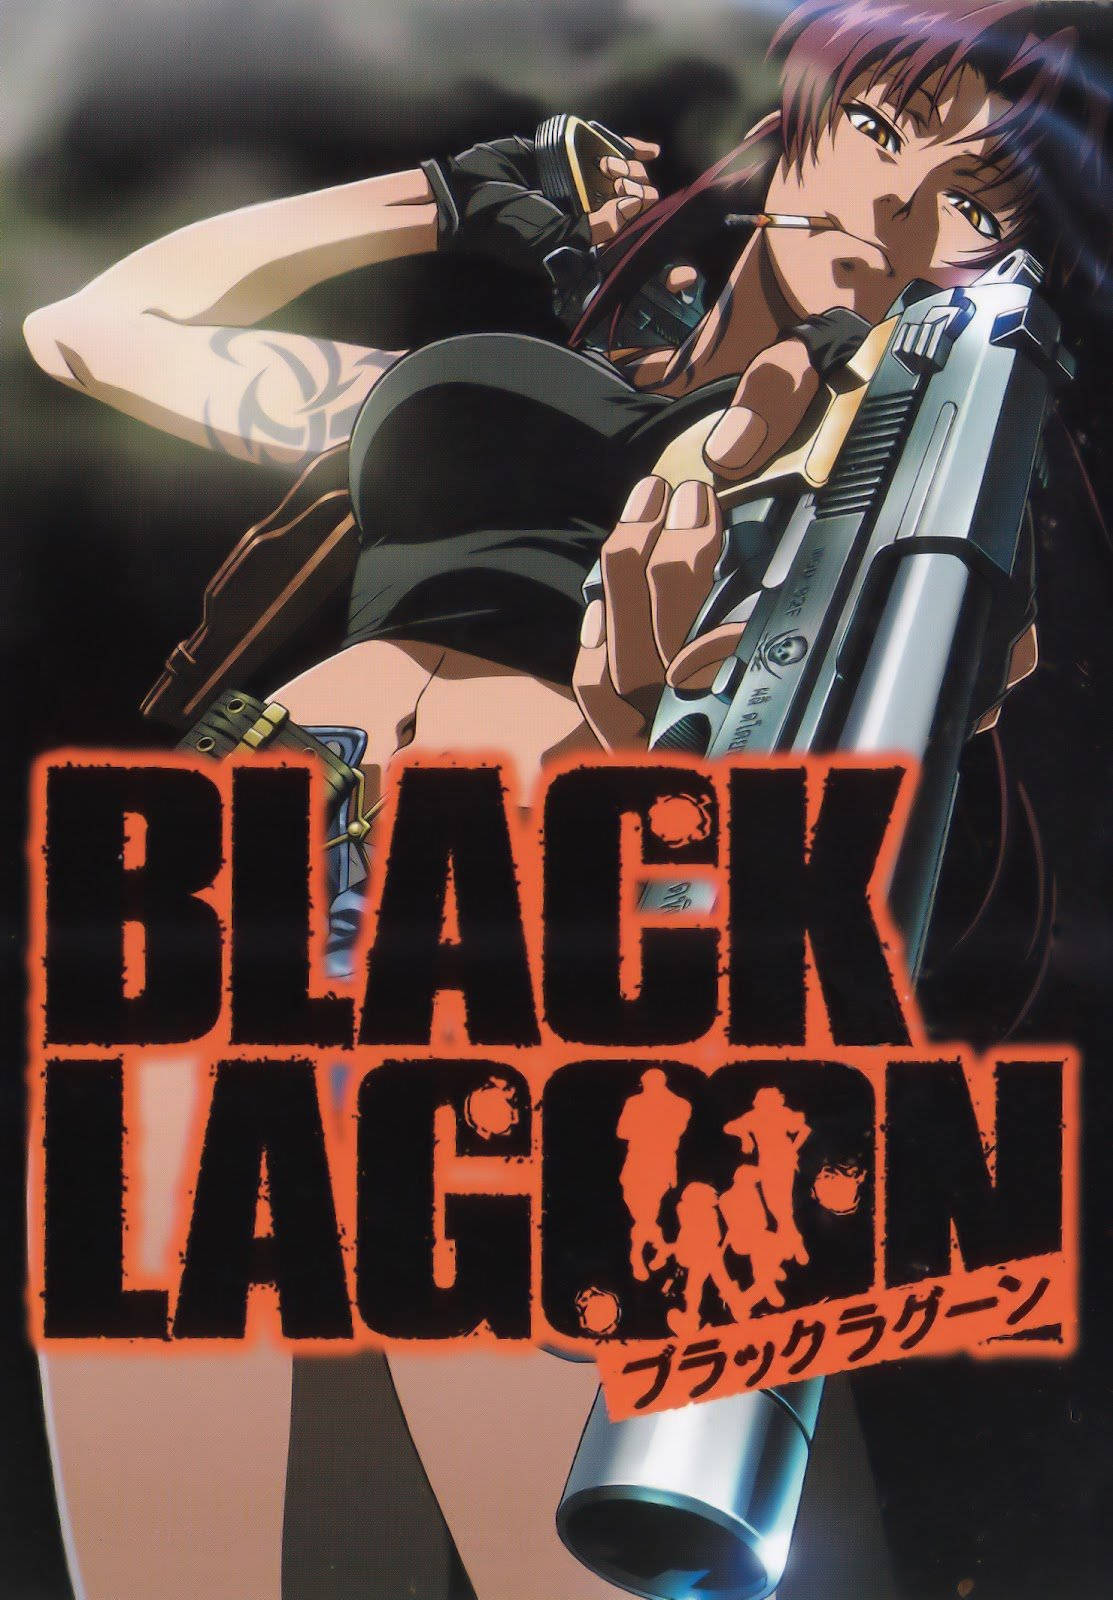 Cool Revy Black Lagoon Poster Wallpaper